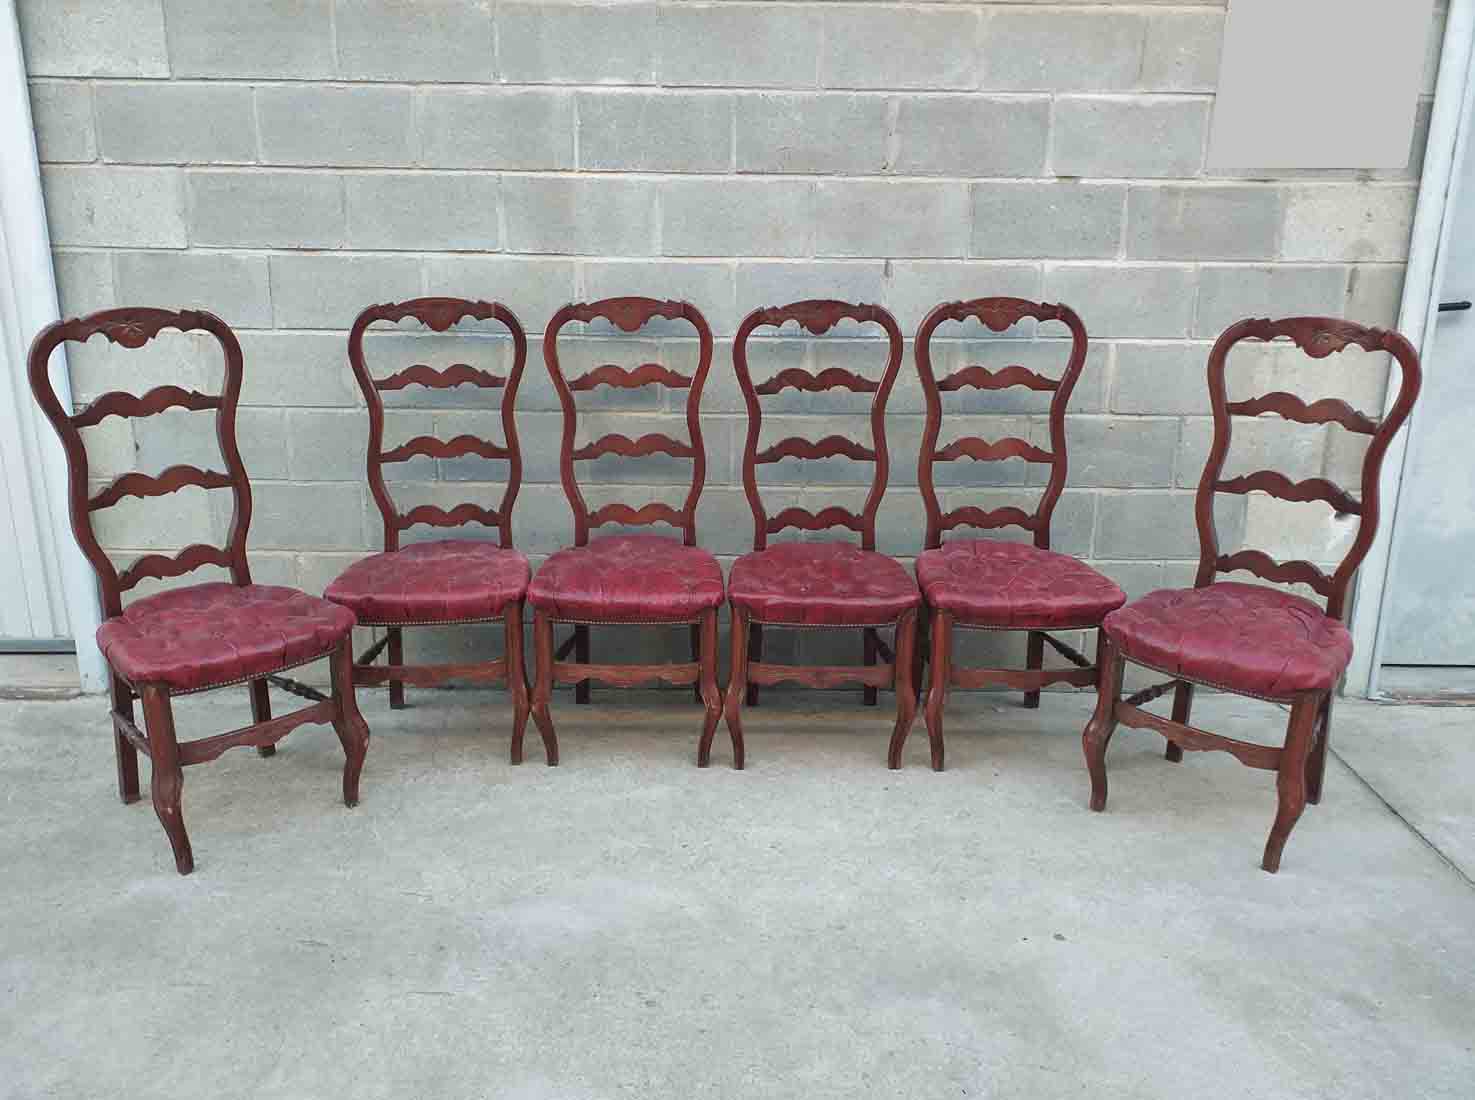 6 seis sillas antiguas cuero capitoné estilo inglés. Sillas comedor  antiguas respaldo alto provenzal.